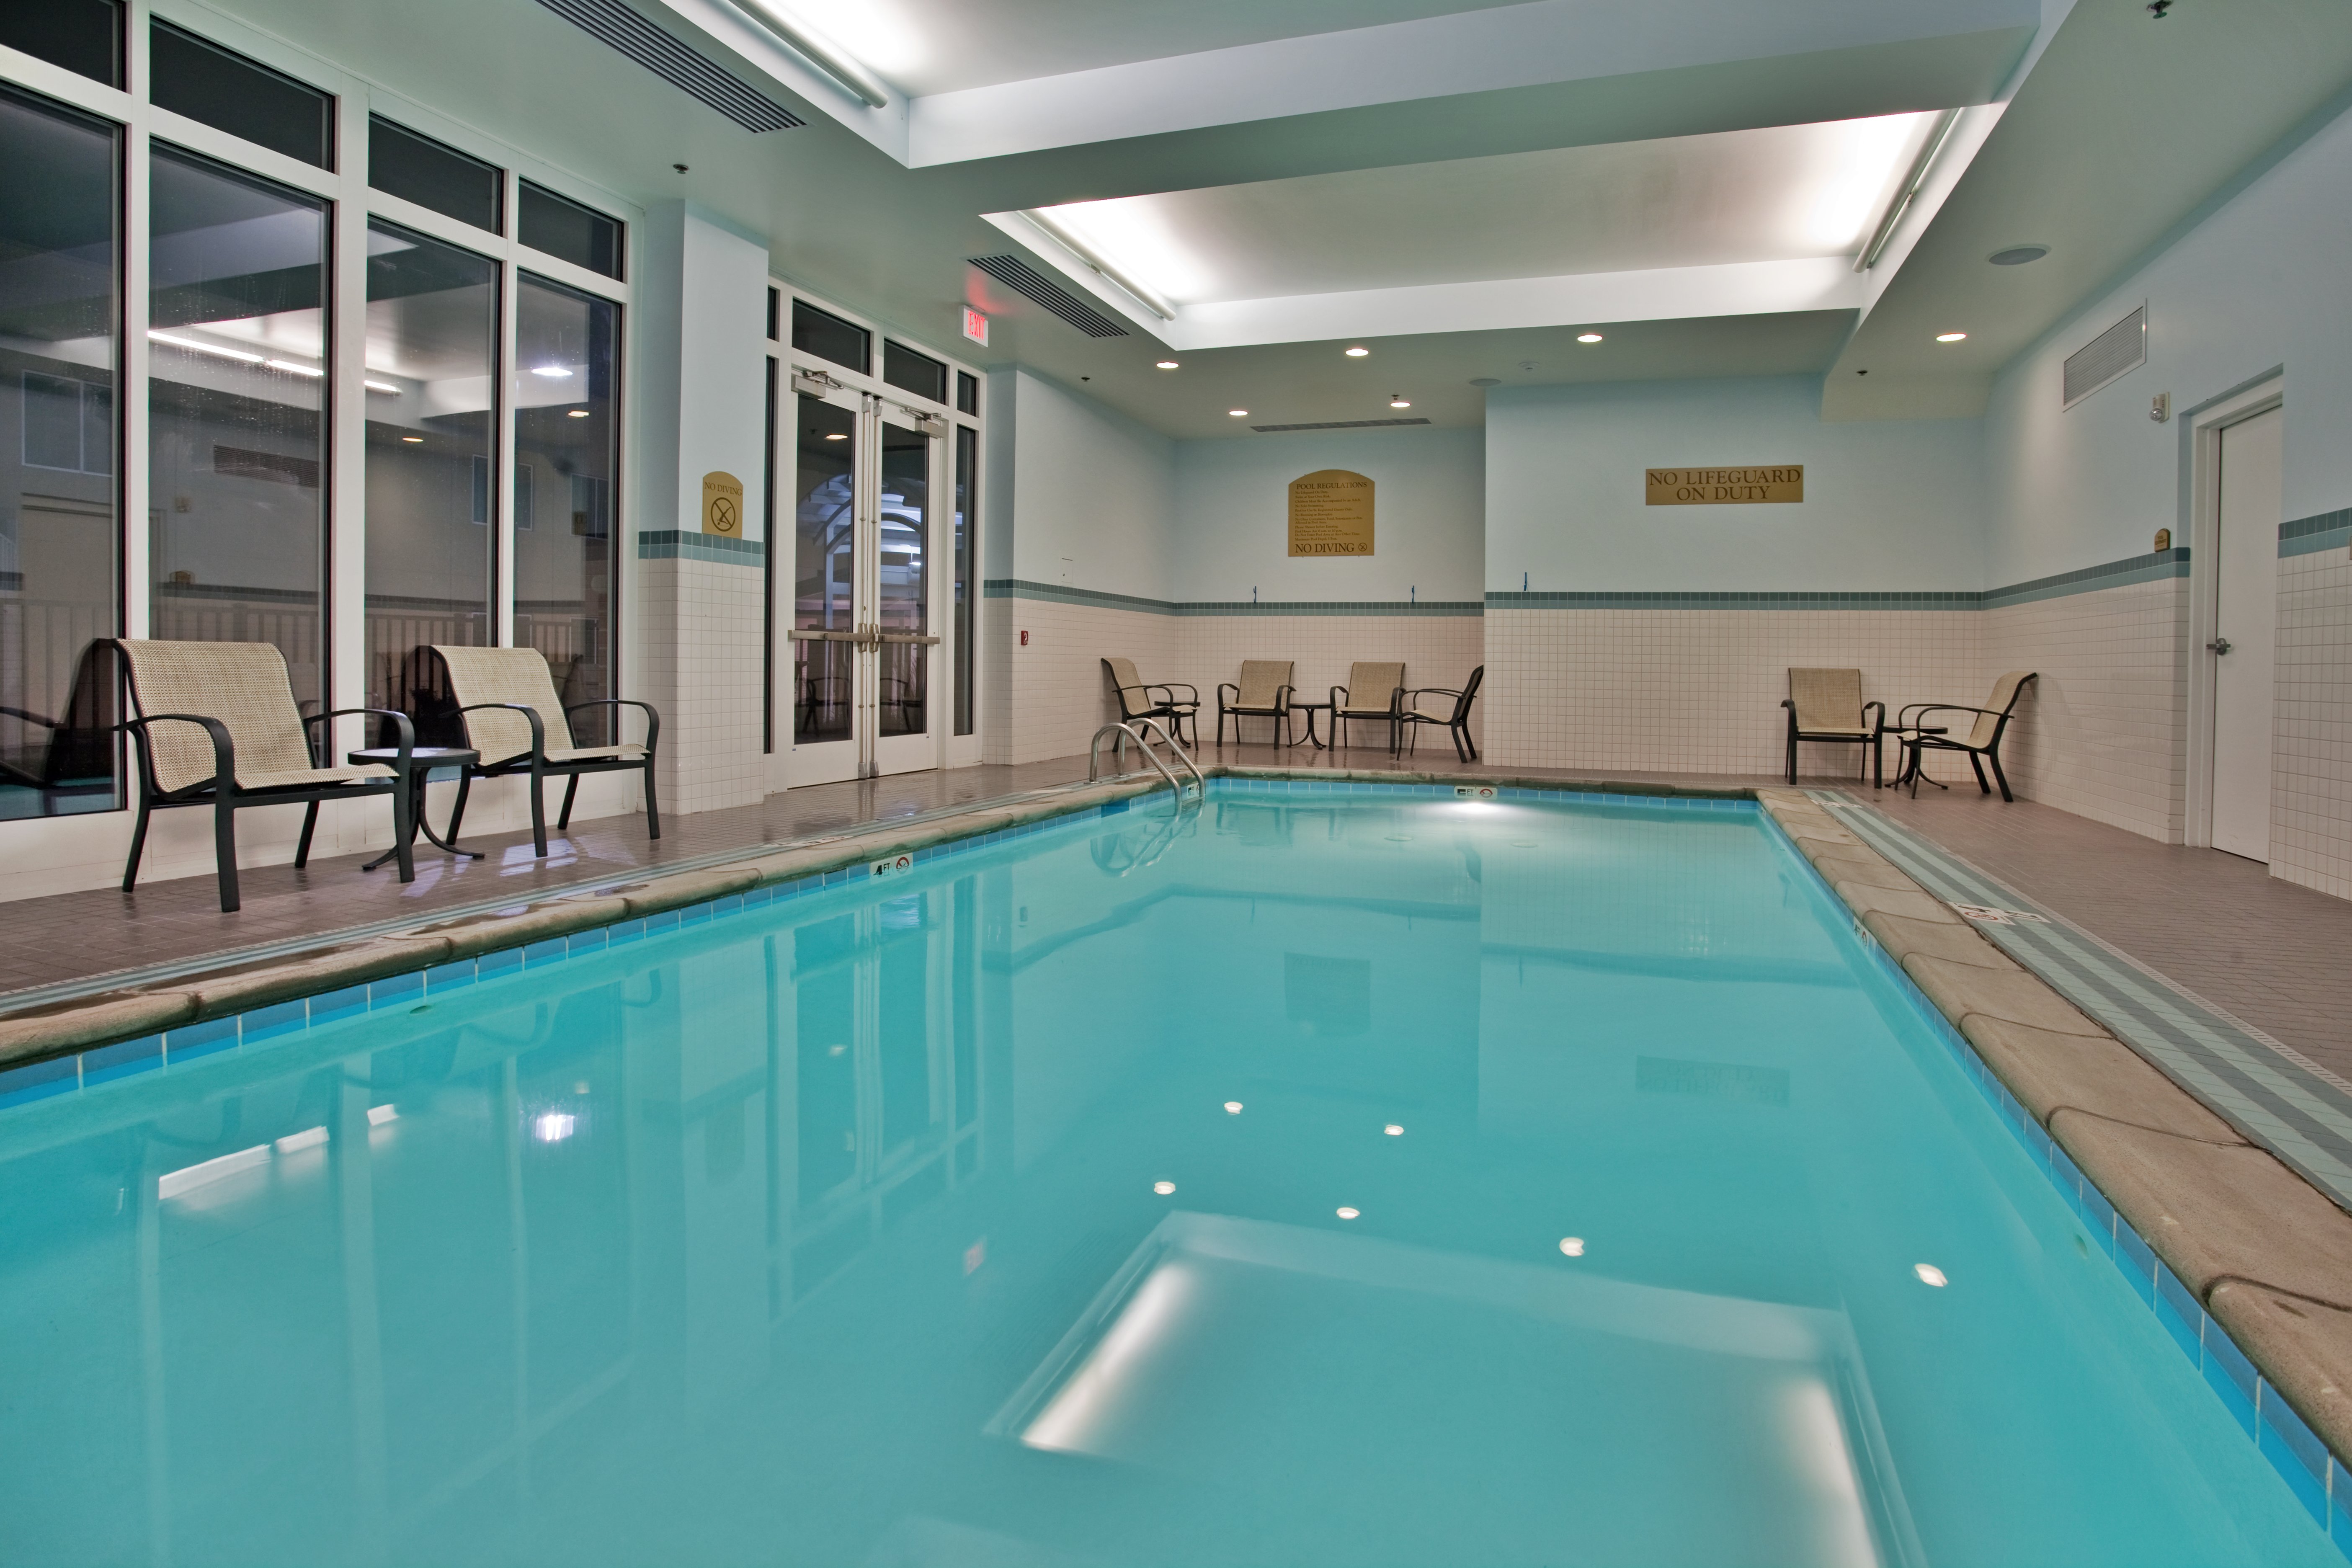 Enjoy the heated indoor swimming pool